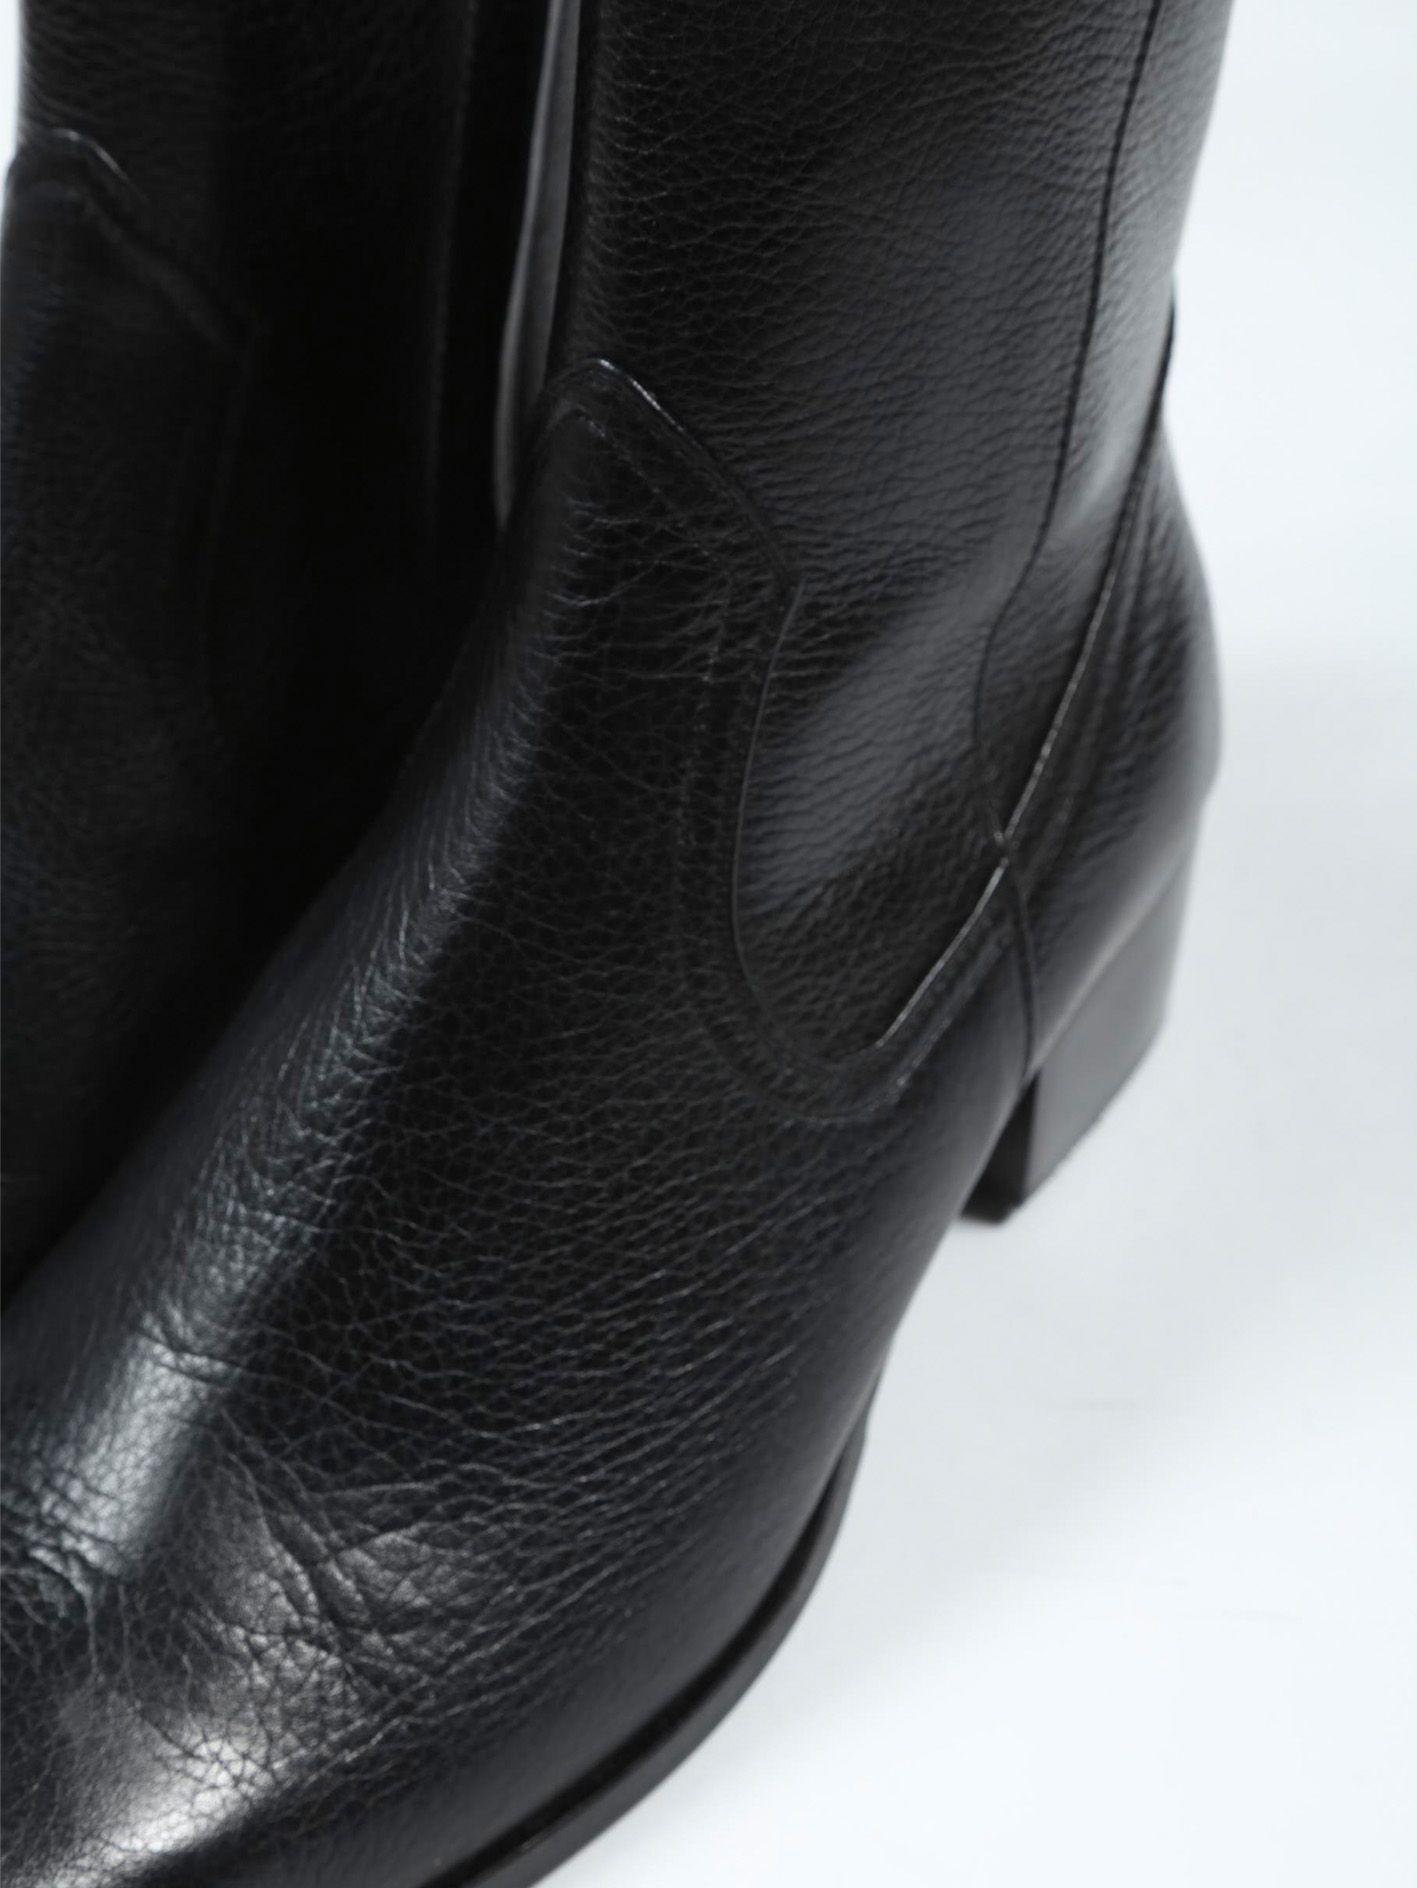 GalaabenD - エンボス 5cm ヒールブーツ - Emboss Heel Boots - Black